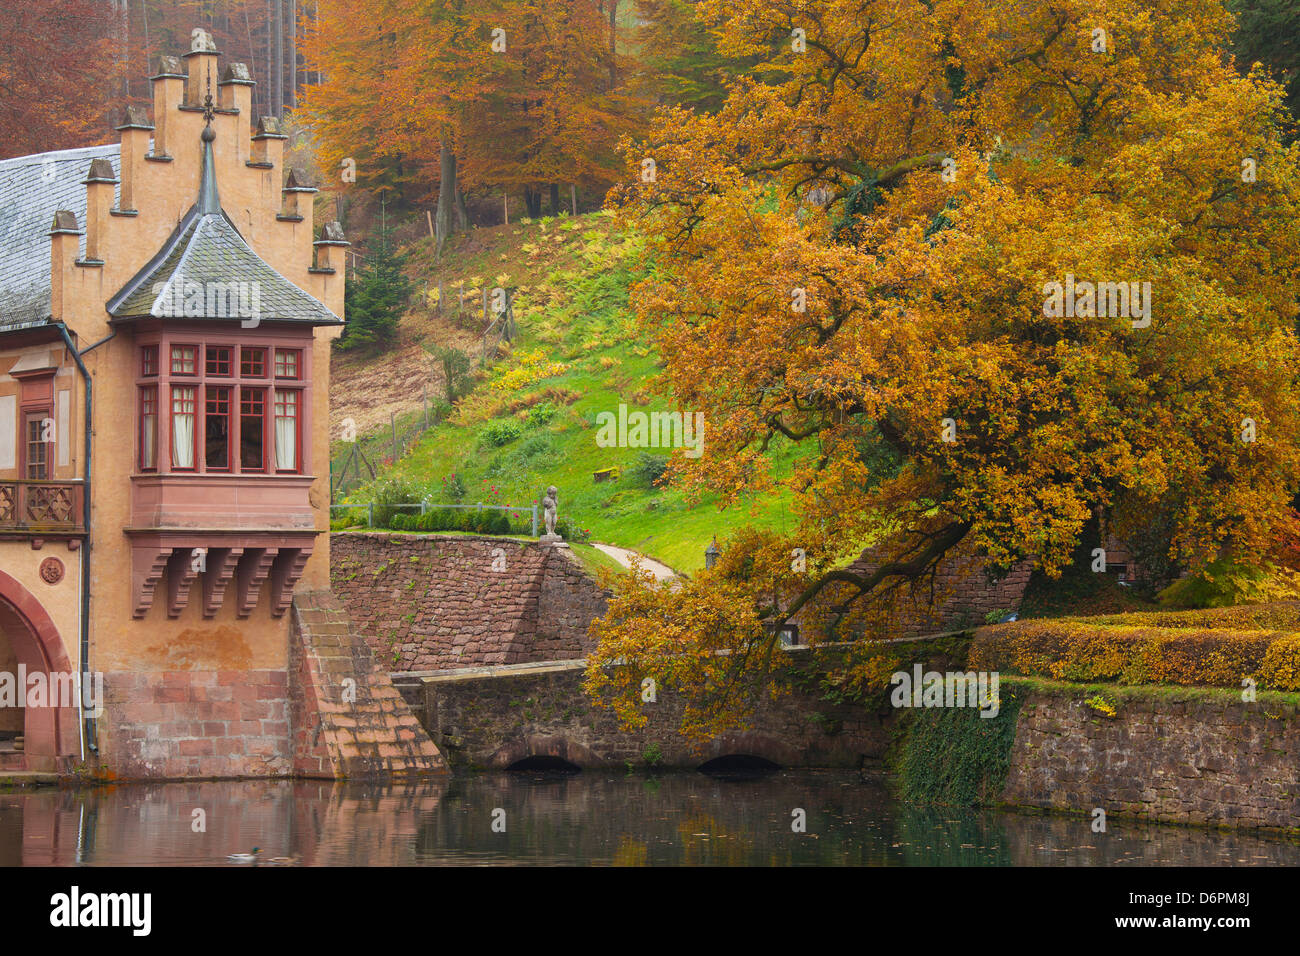 Schloss (Castle) Mespelbrunn in autumn, near Frankfurt, Germany, Europe Stock Photo